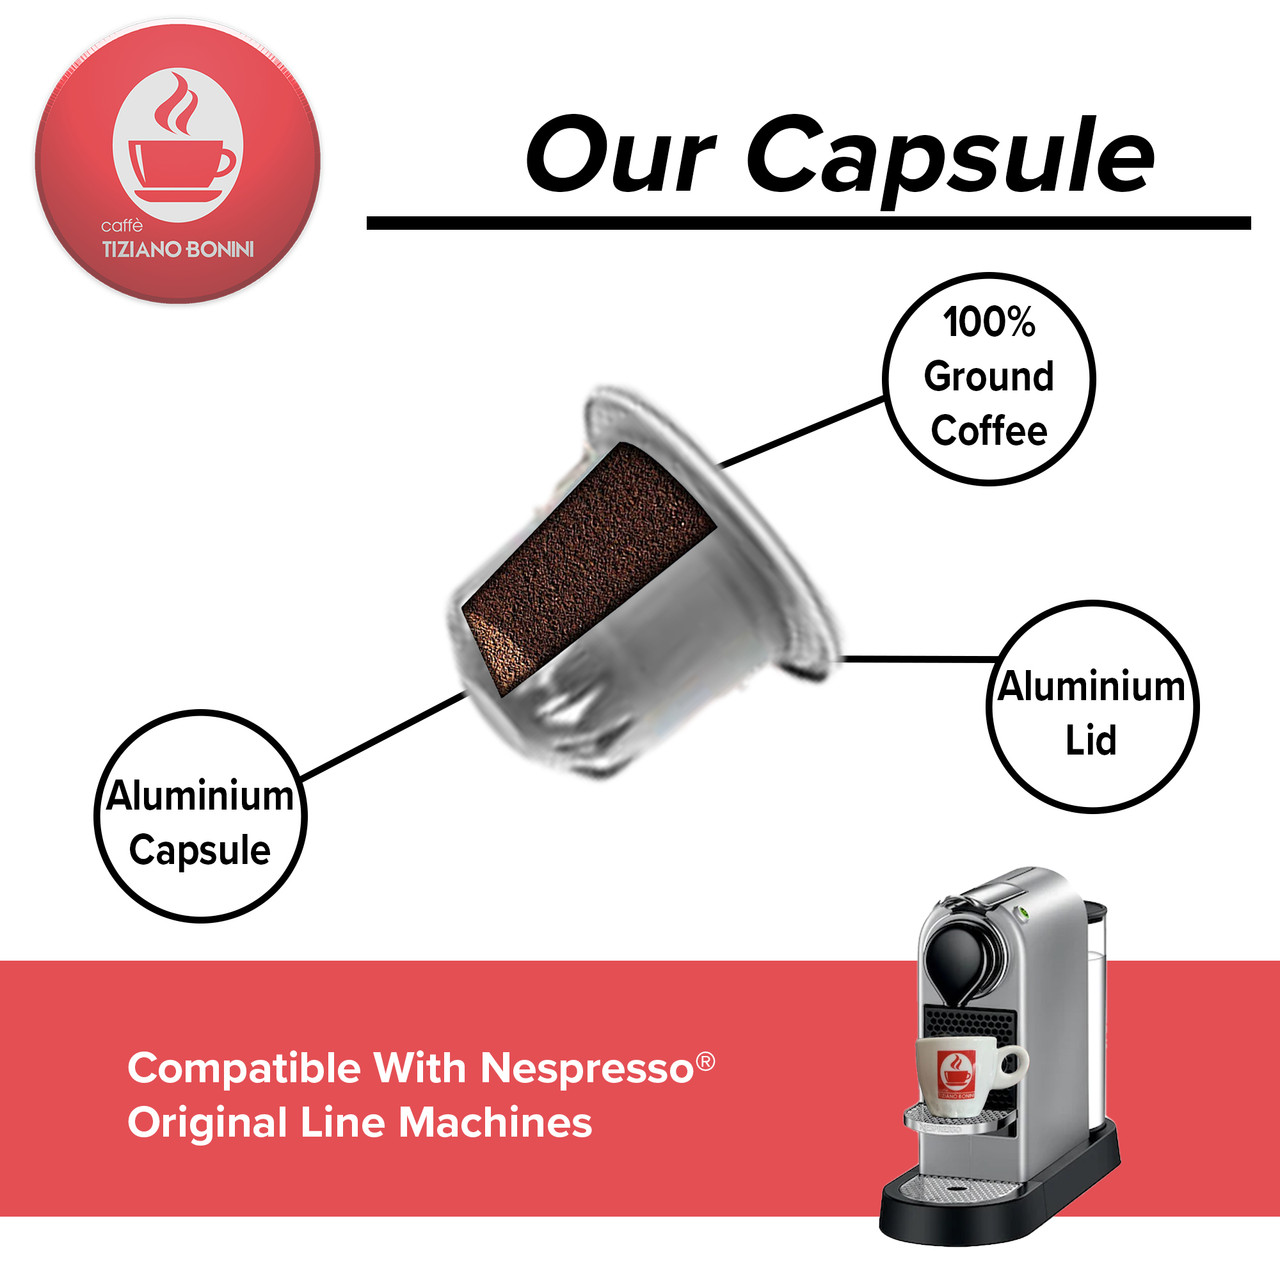 200 Aluminum Capsules Espresso Coffee BORBONE comp. NESPRESSO in 3 tastes  to cho